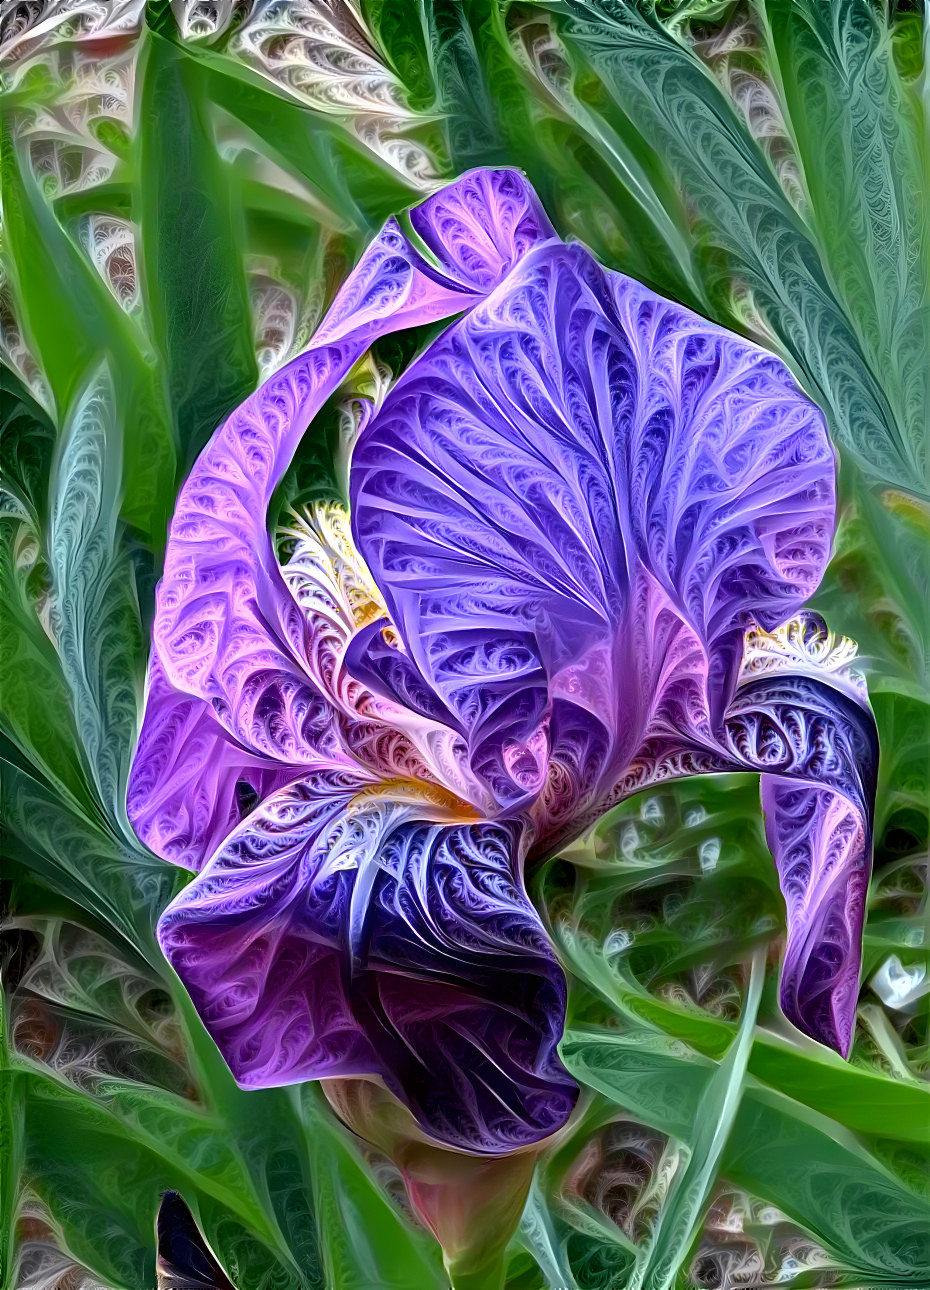 Iris from our garden